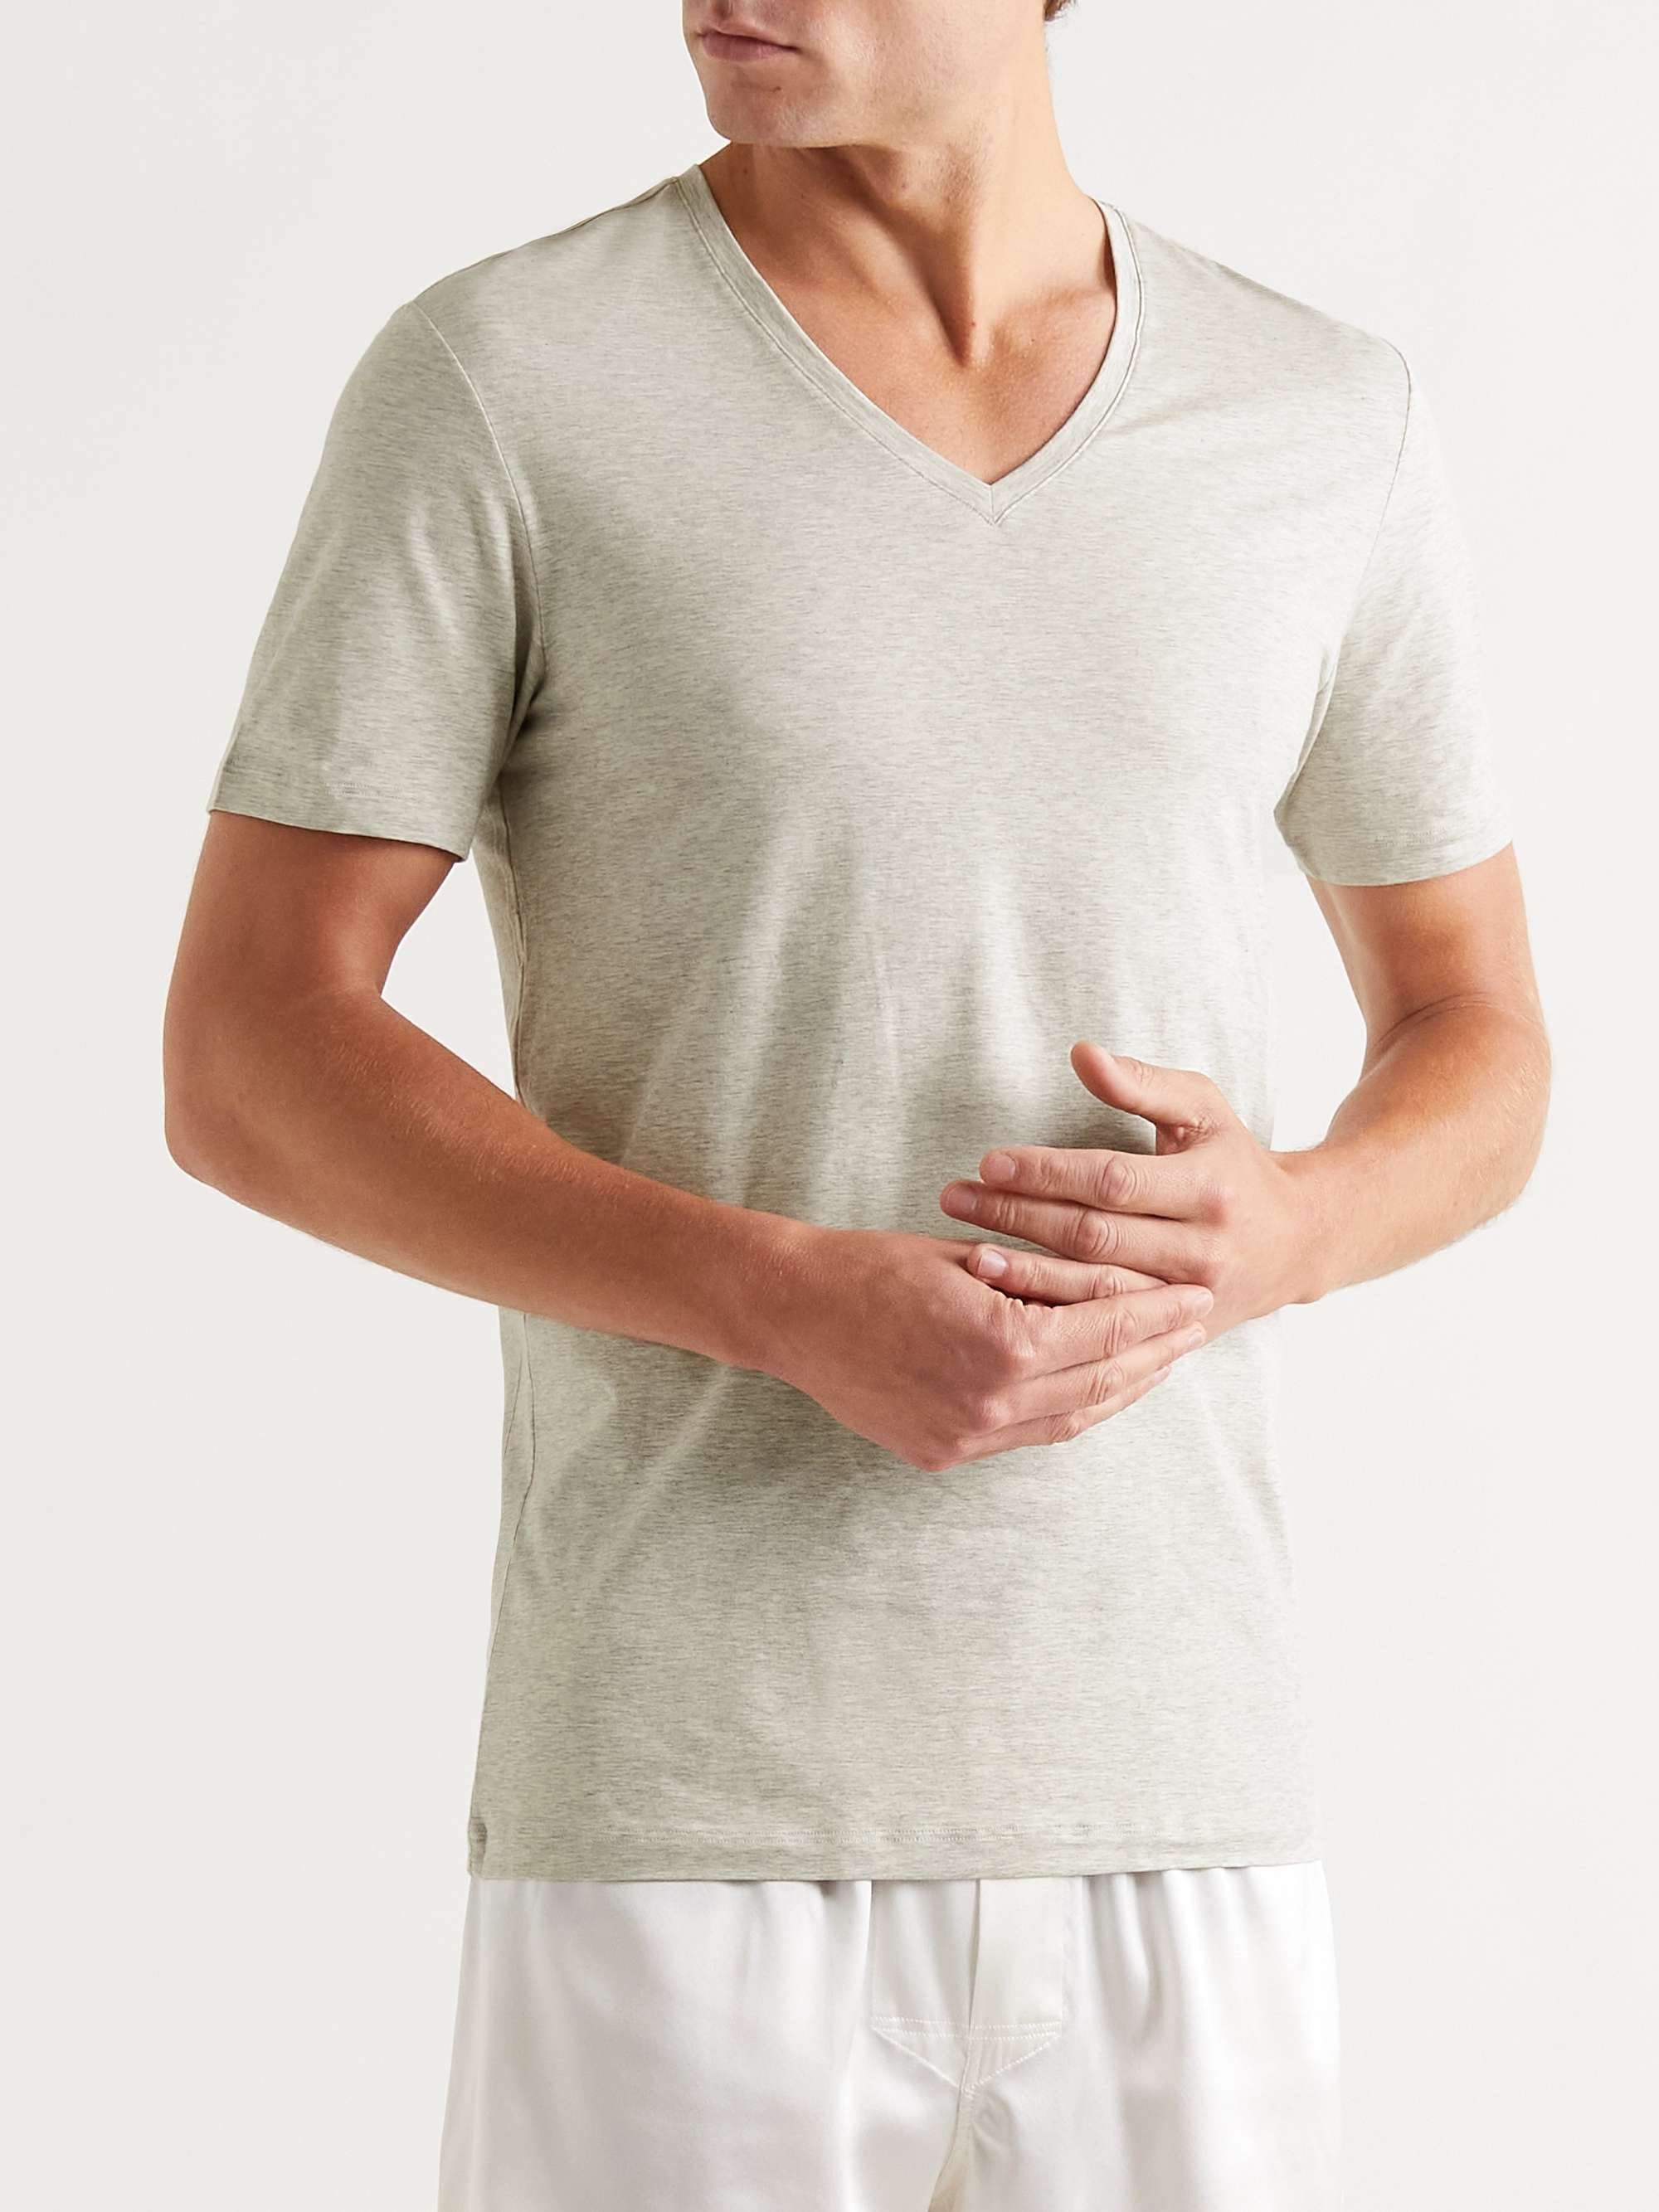 HANRO Mercerised Cotton-Blend V-Neck T-Shirt